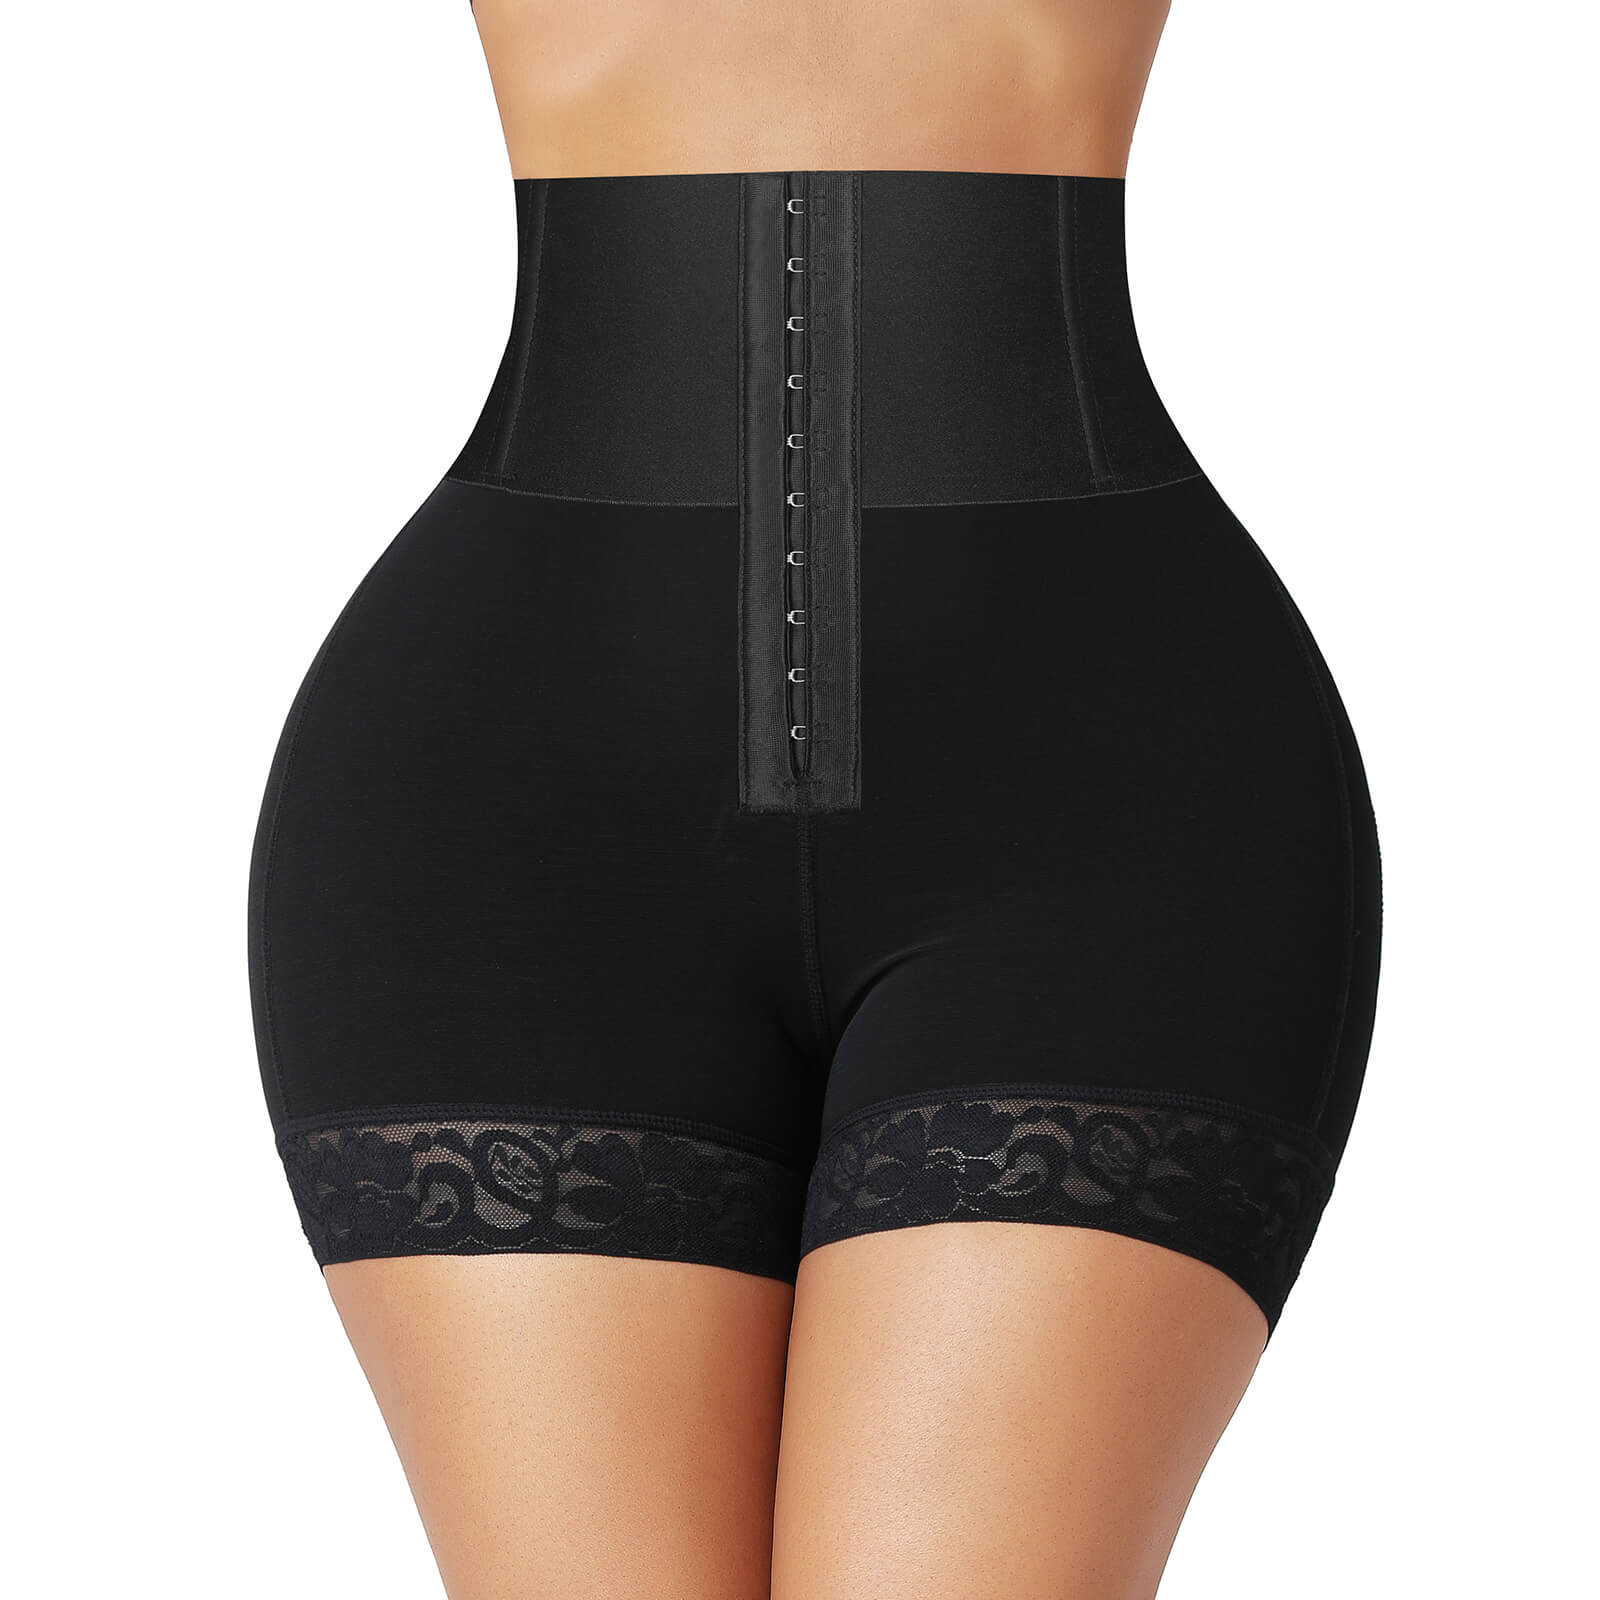 wholesale shapewear women's high waist butt